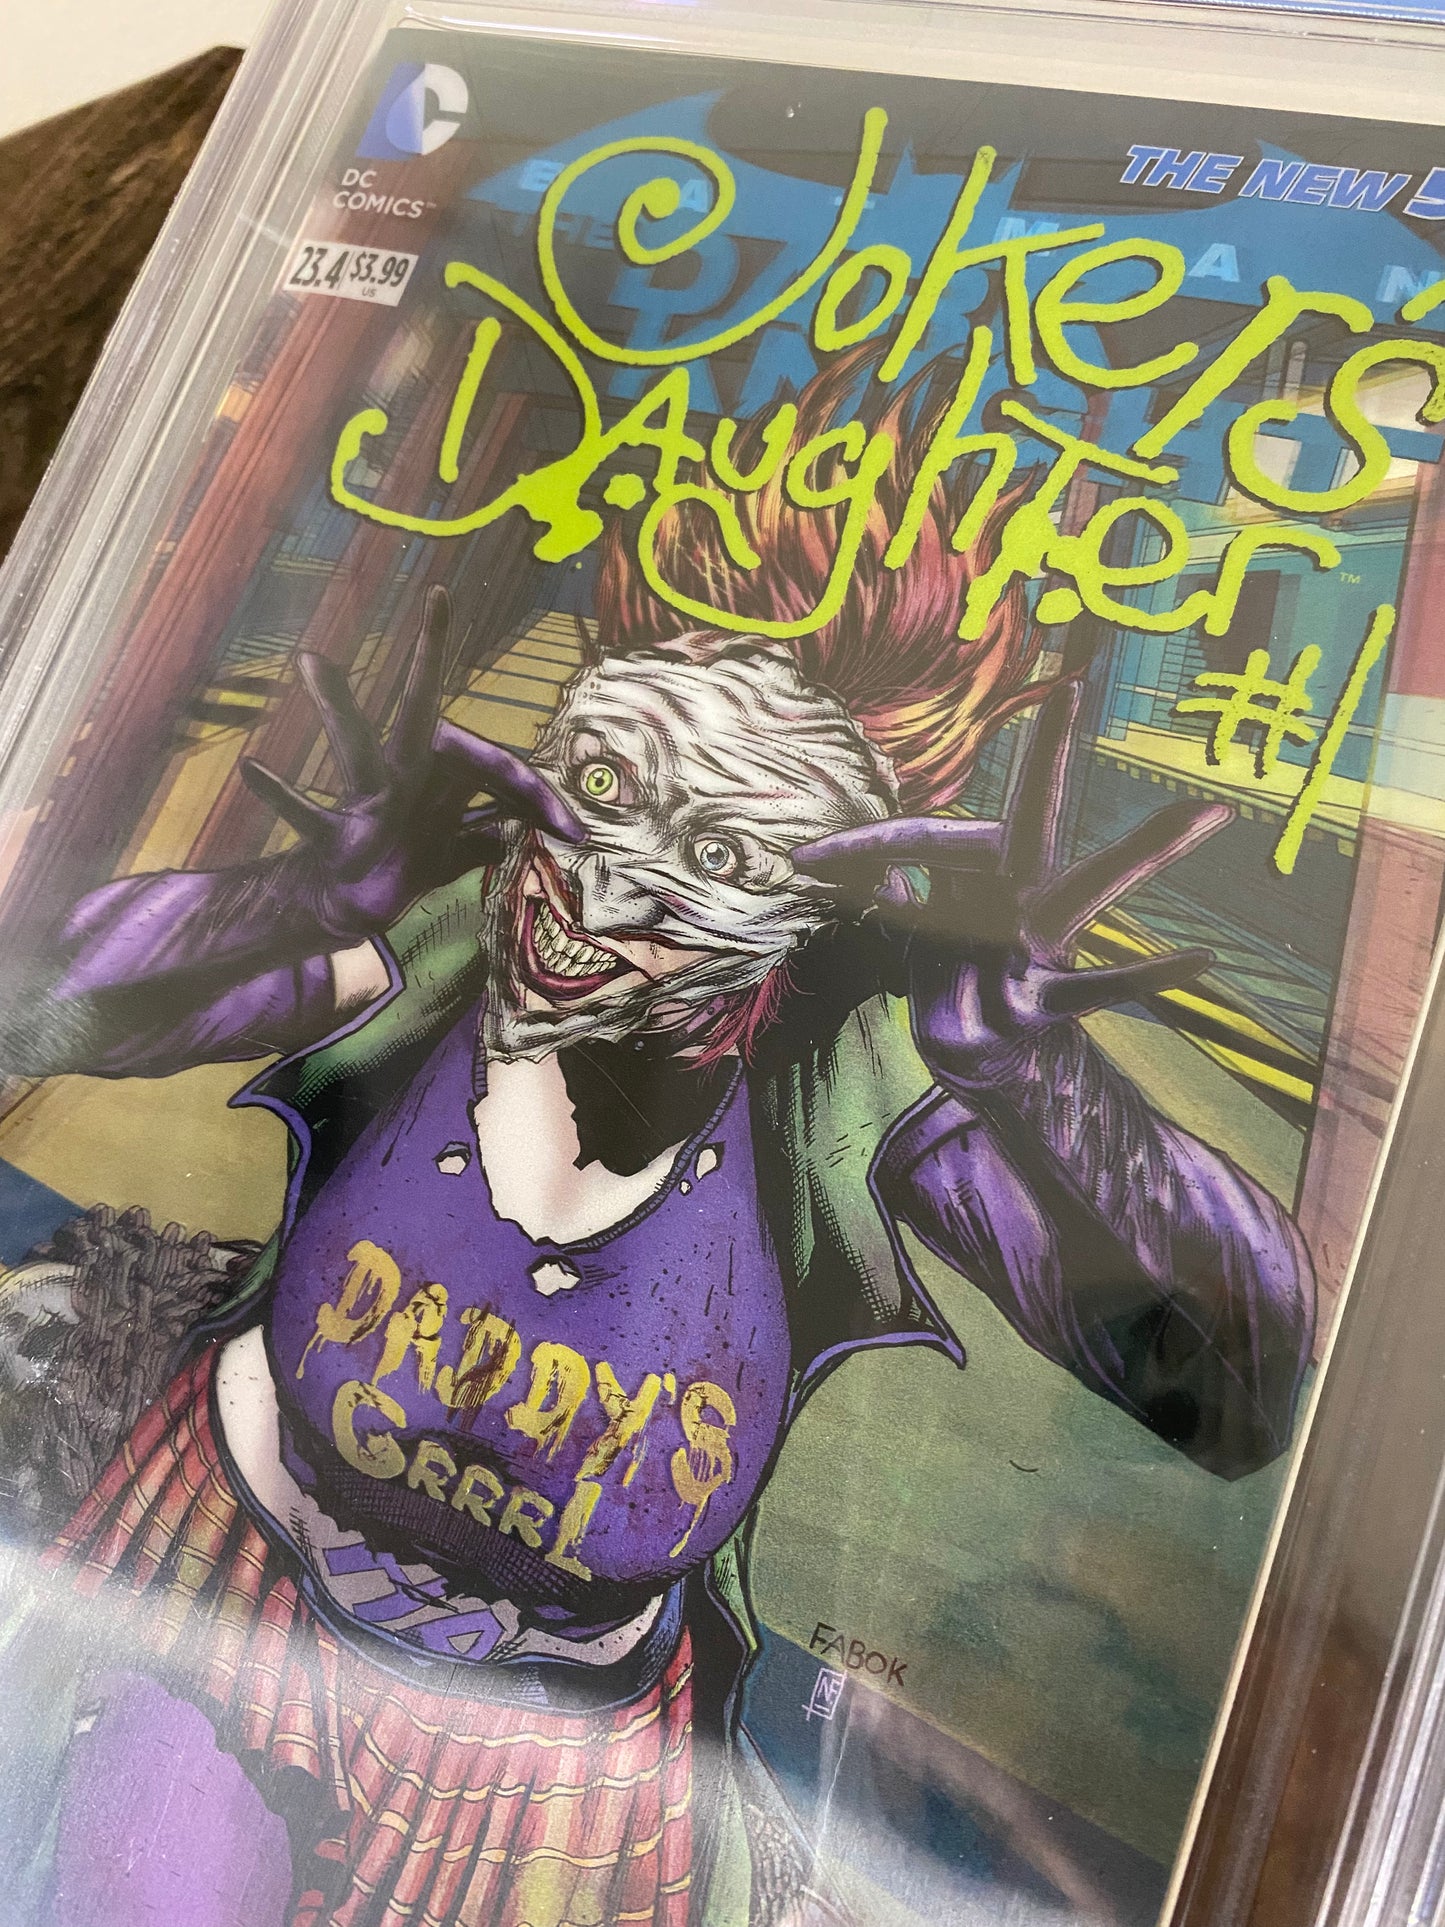 Batman: The Dark Knight #23.4 - Joker’s Daughter #1